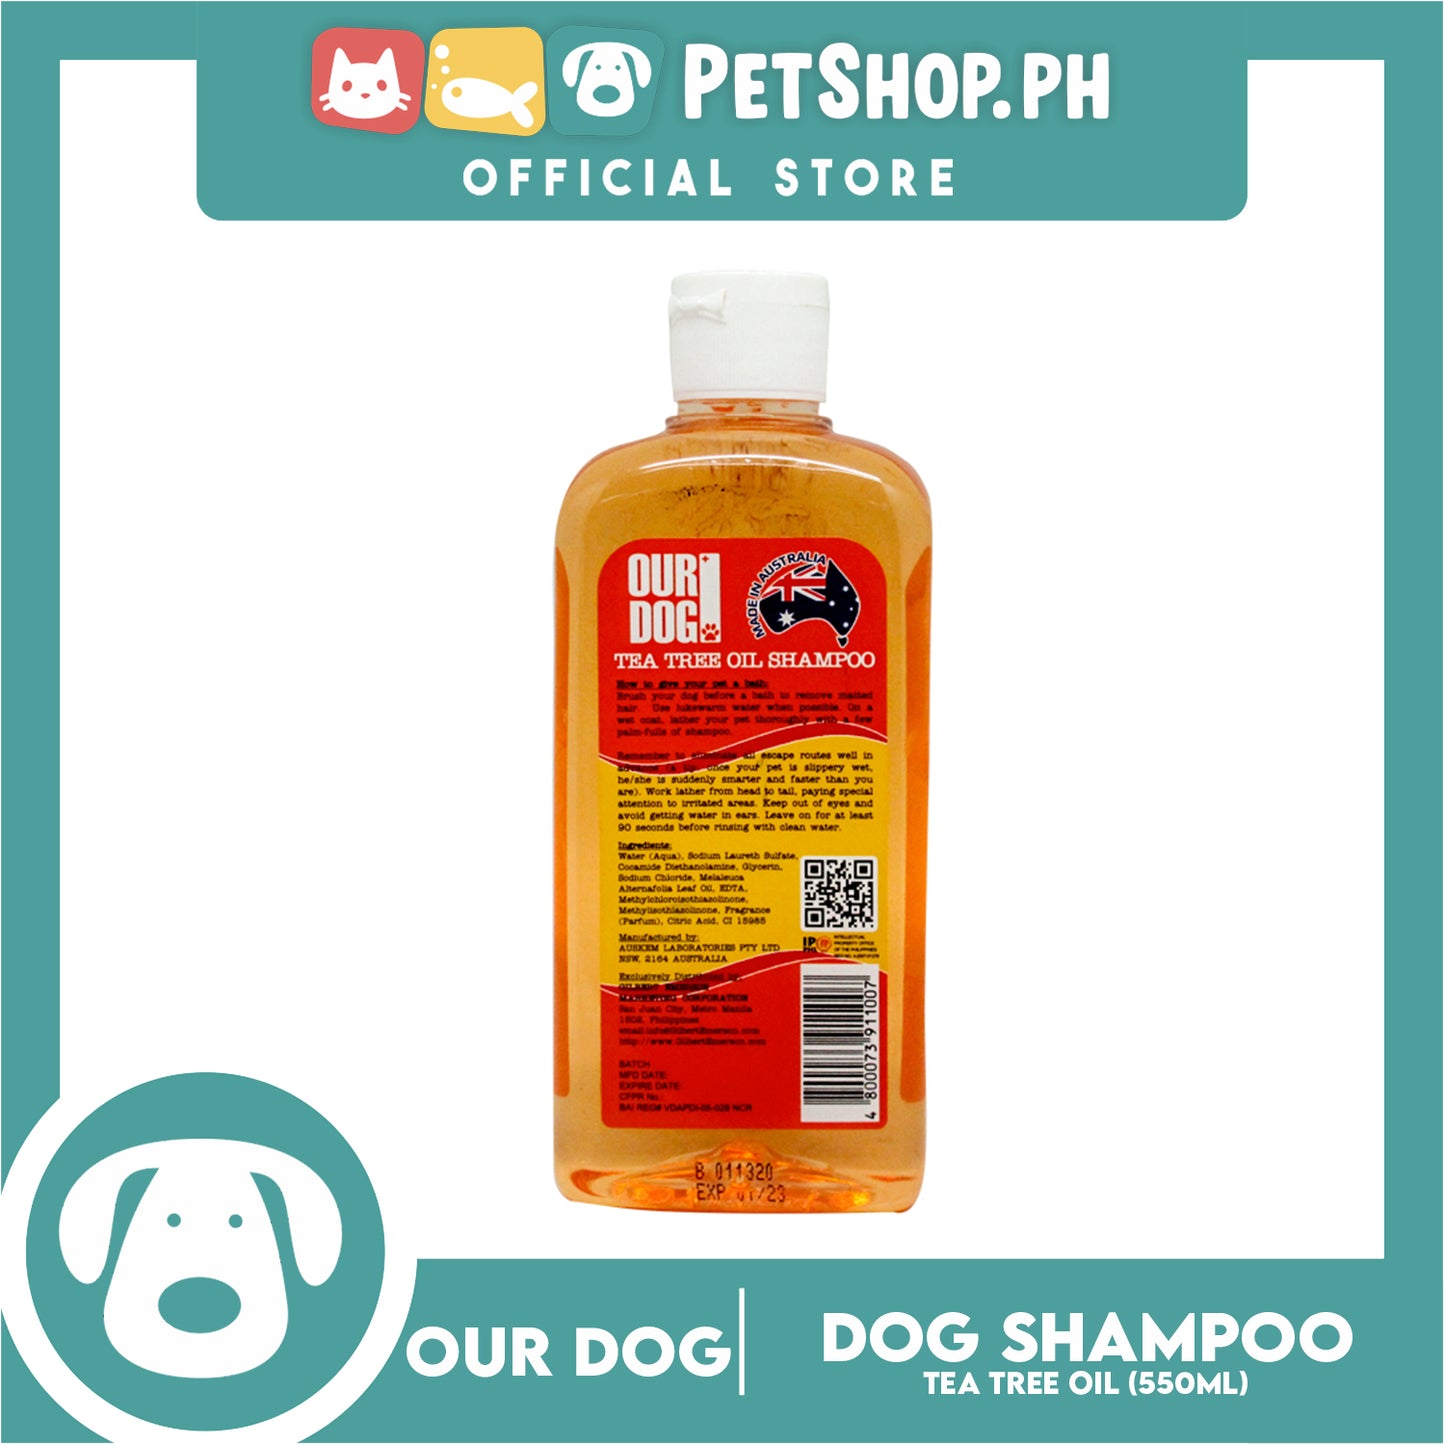 Our Dog Tea Tree Oil Dog Shampoo 550ml